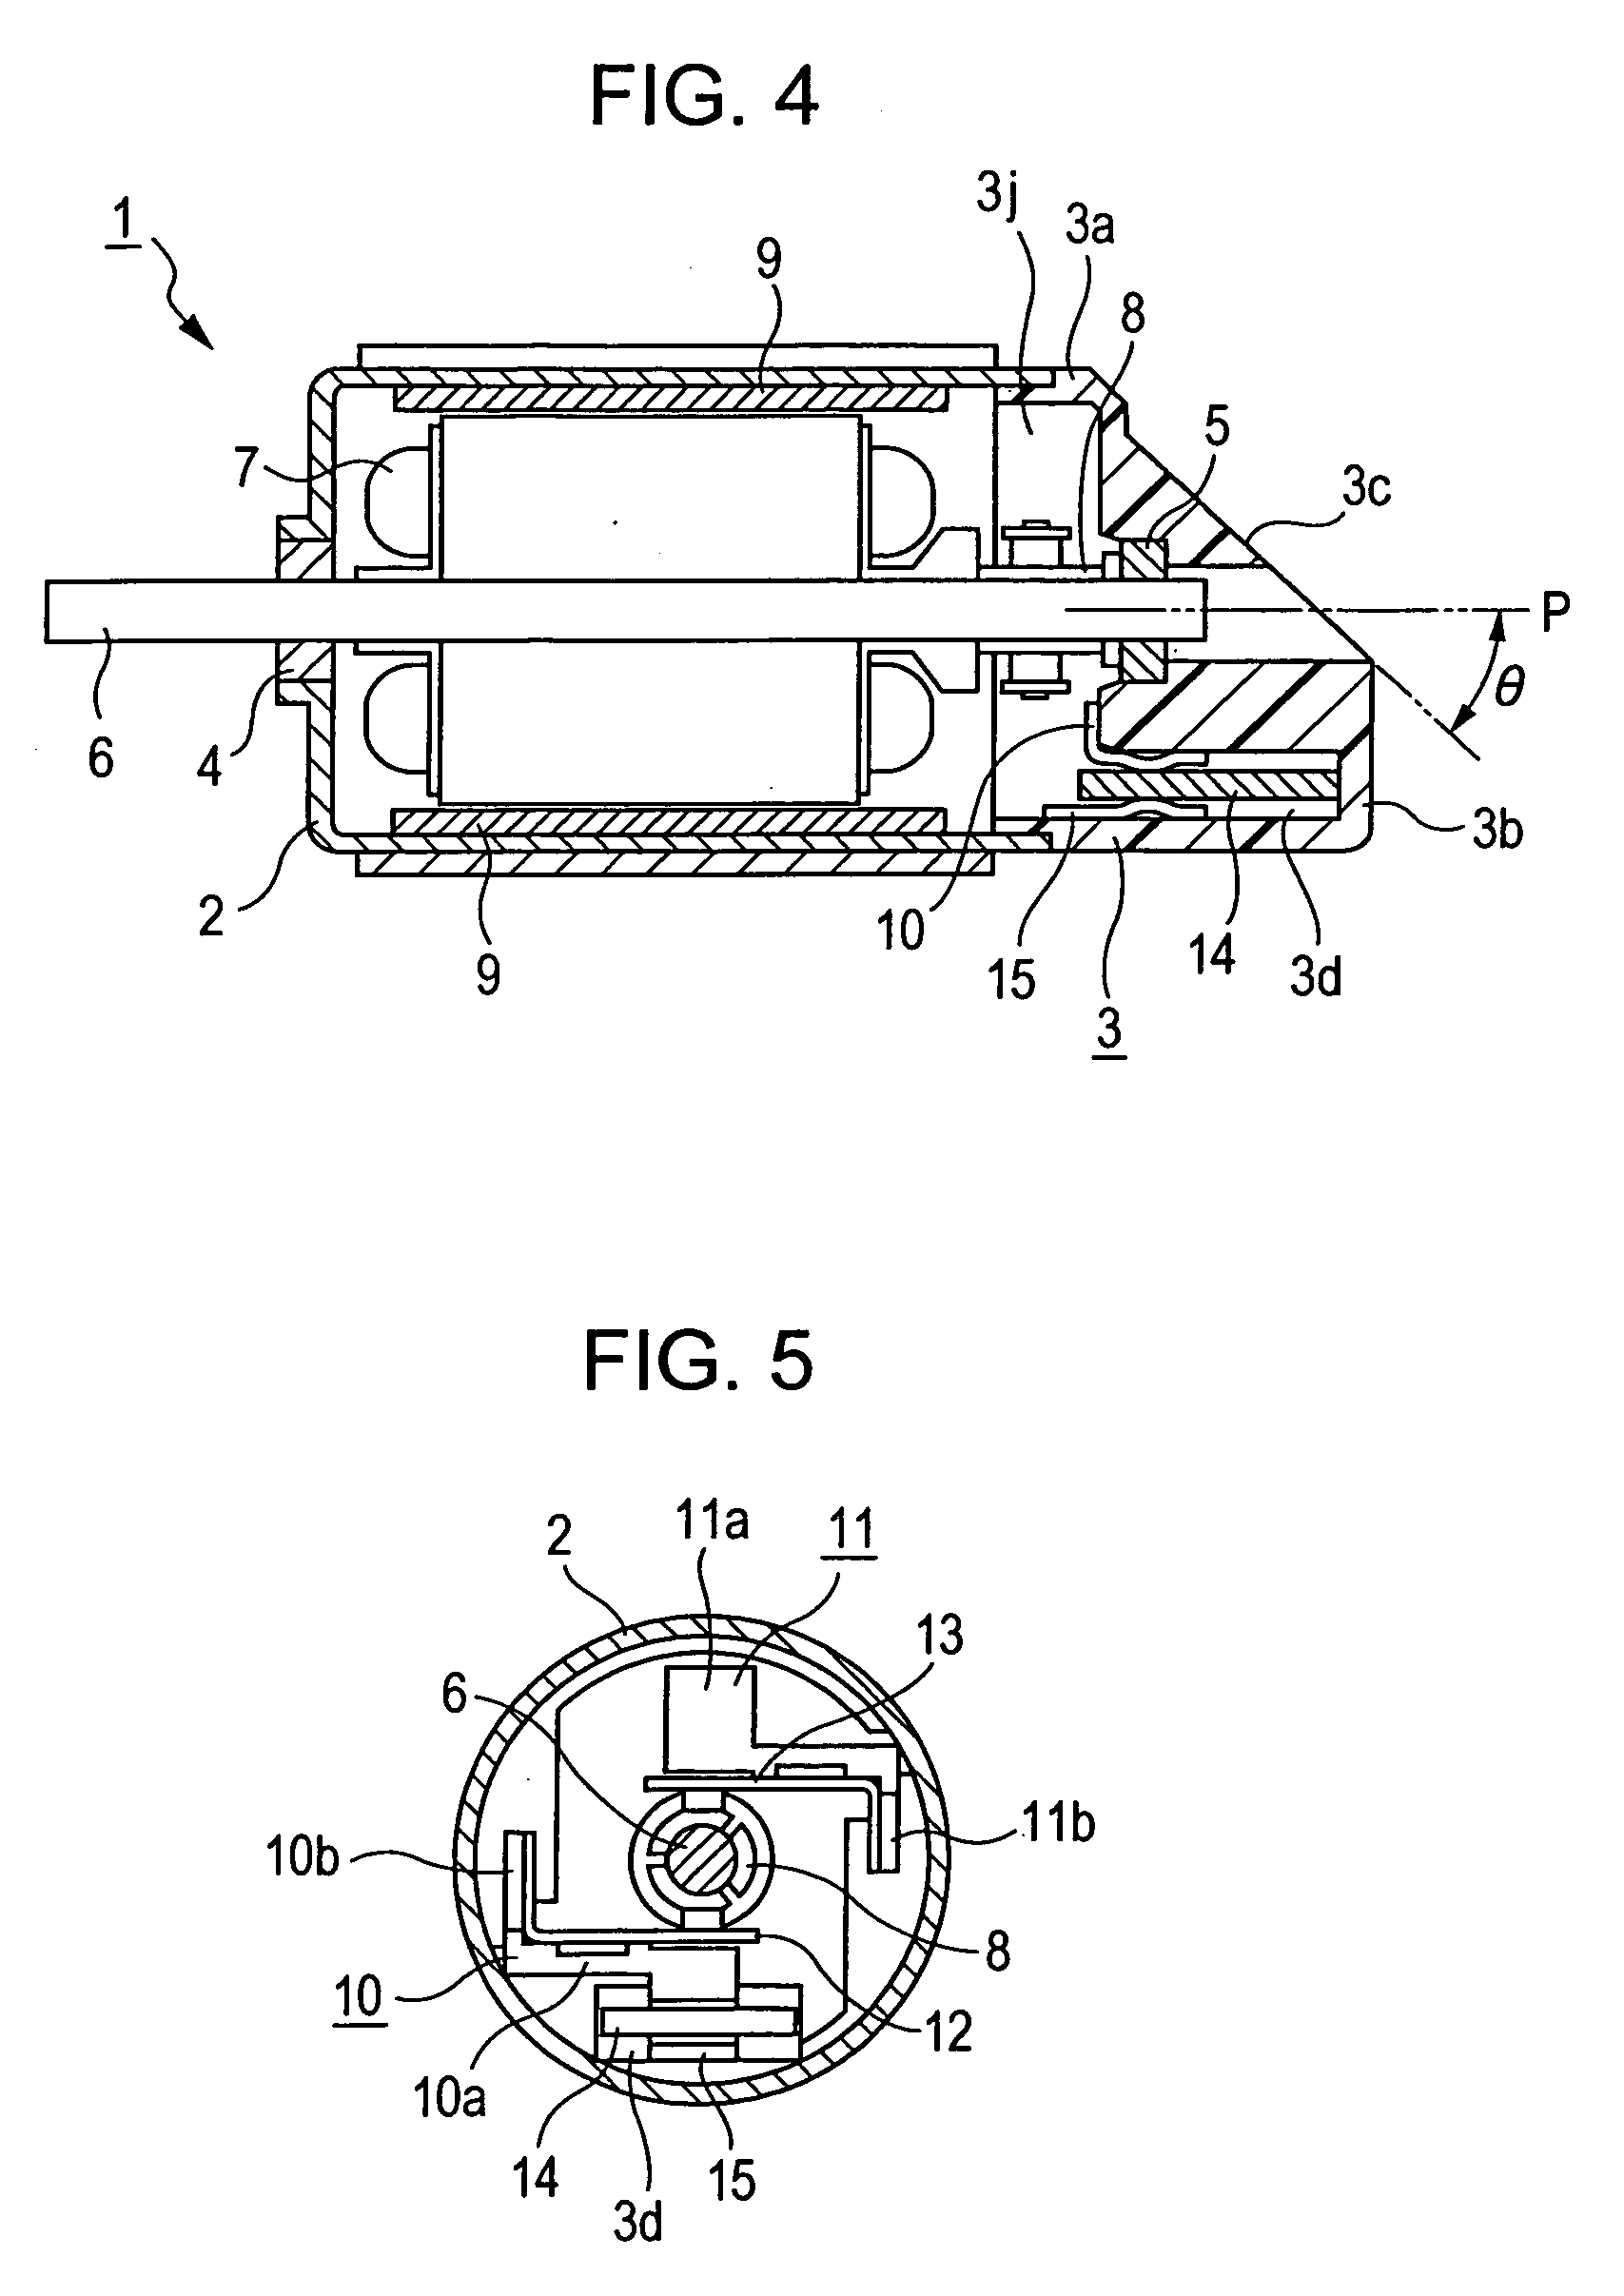 Motor, motor having encoder, and multi-direction input device